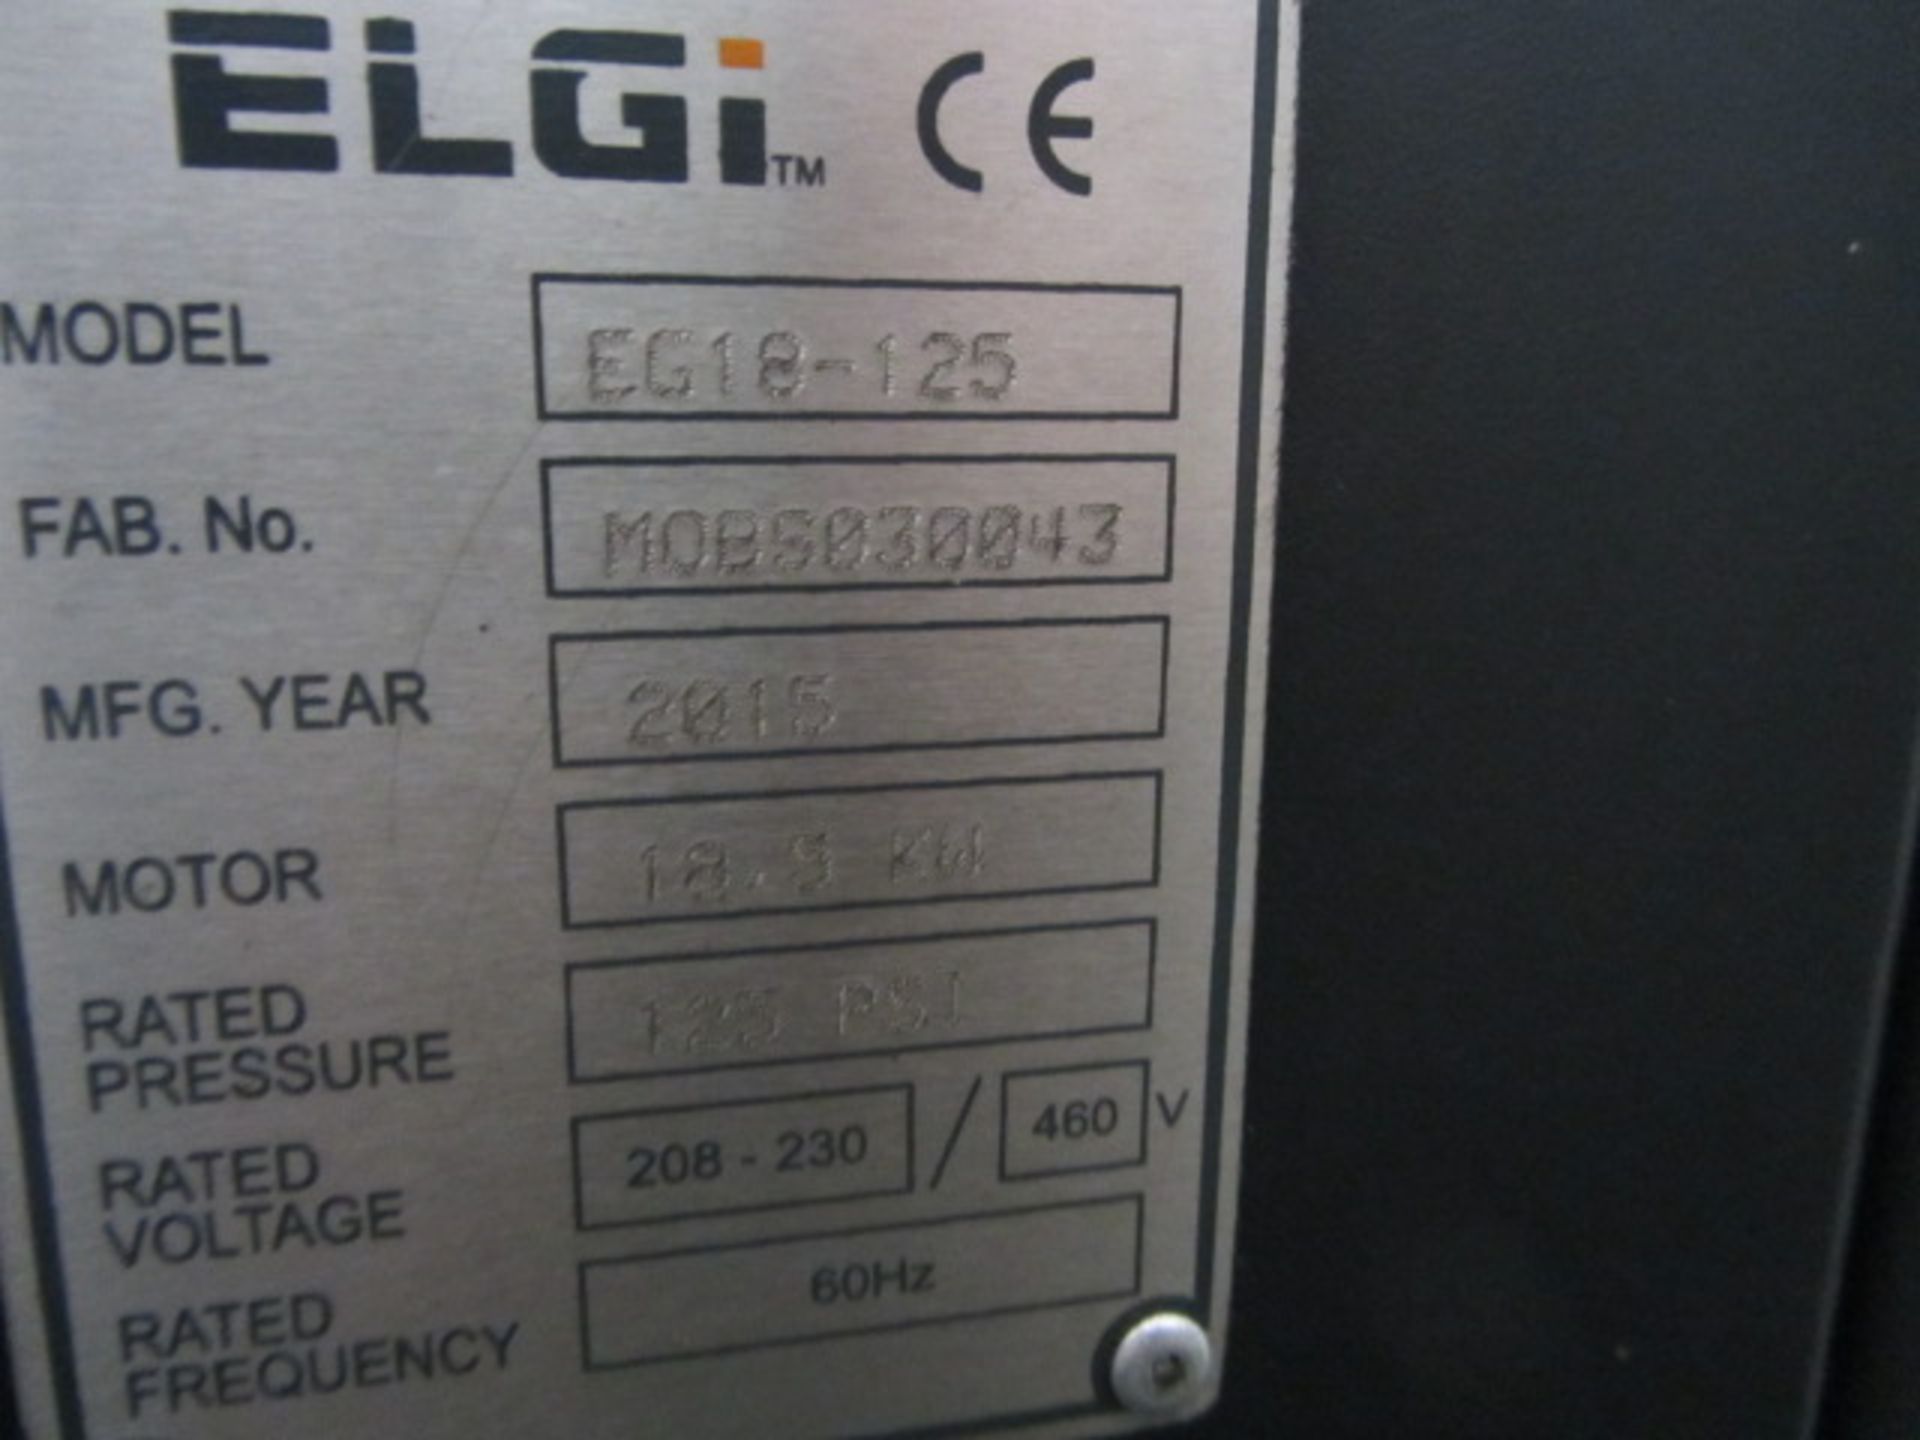 Elgi Model EG18-125 25 HP Rotary Screw Air Compressor with 125 PSI, Neuron II Controls, sn: - Image 5 of 5